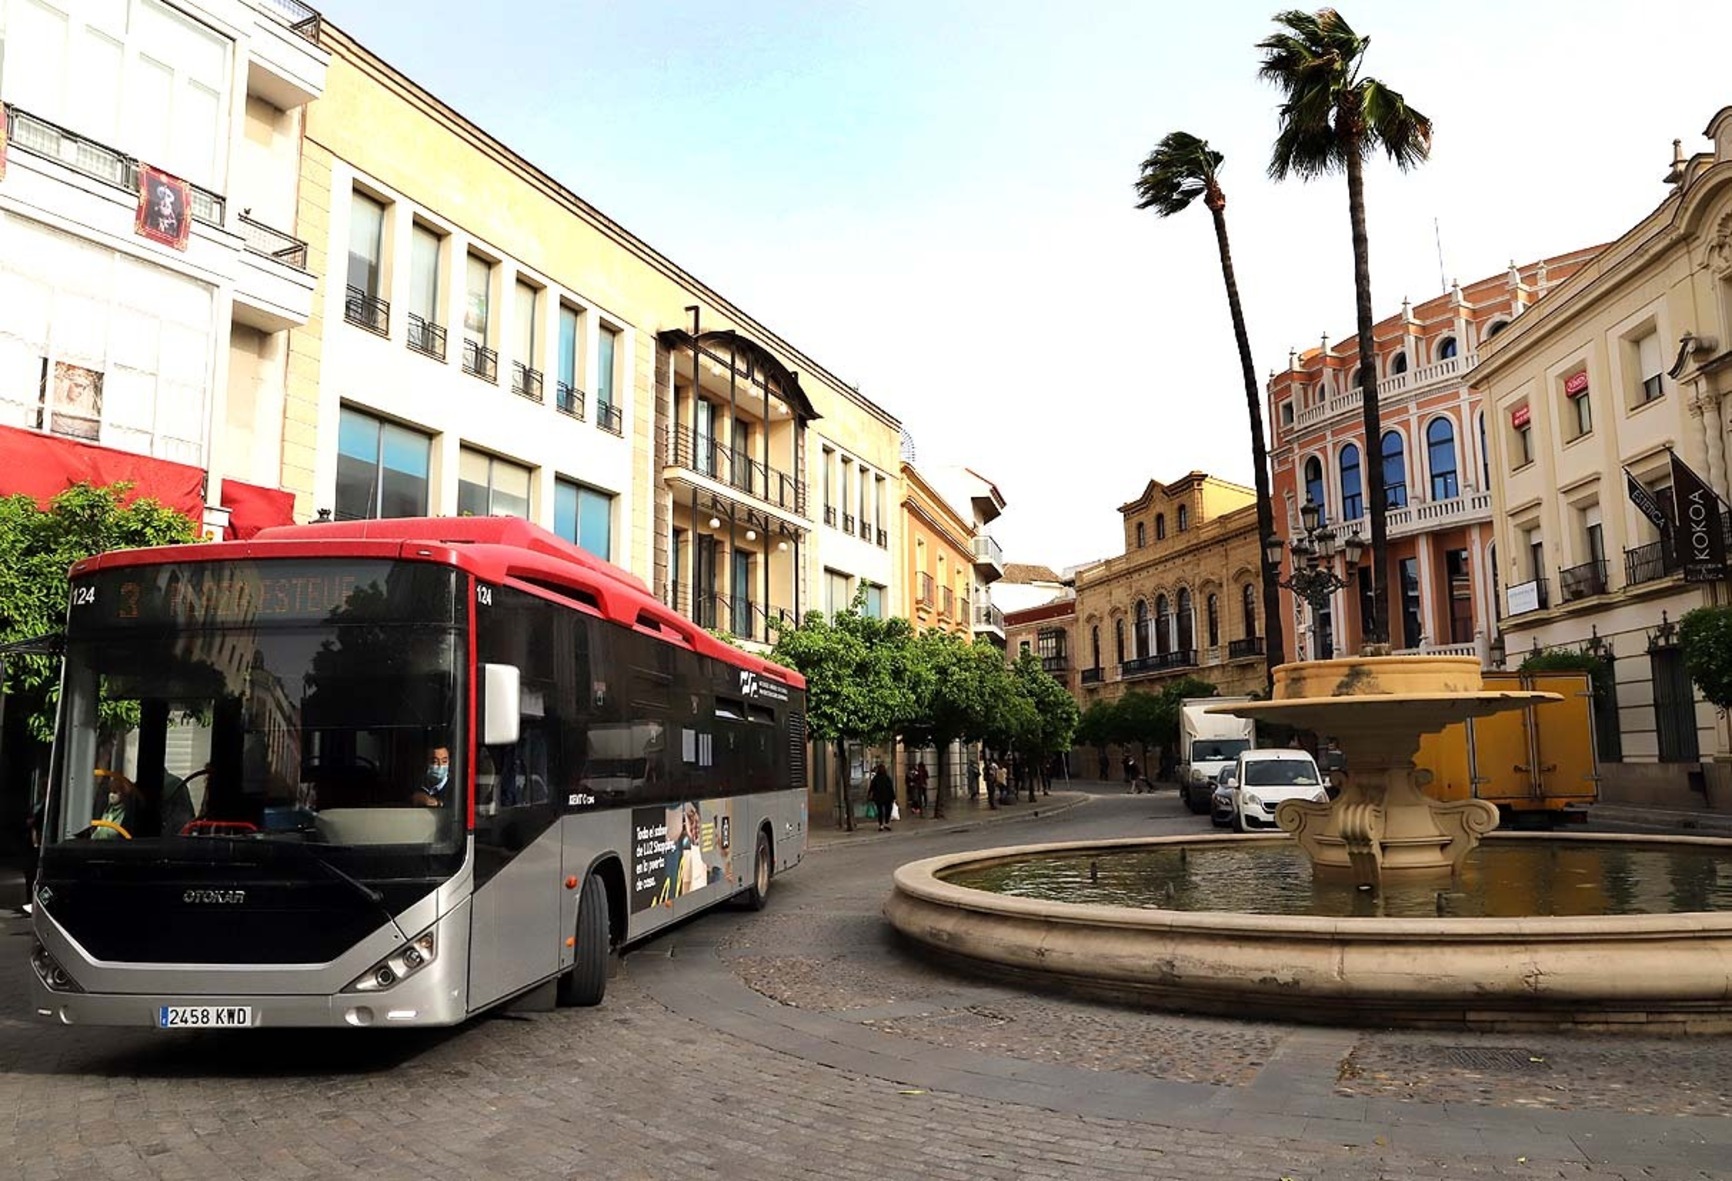 Autobuses eléctricos centro histórico